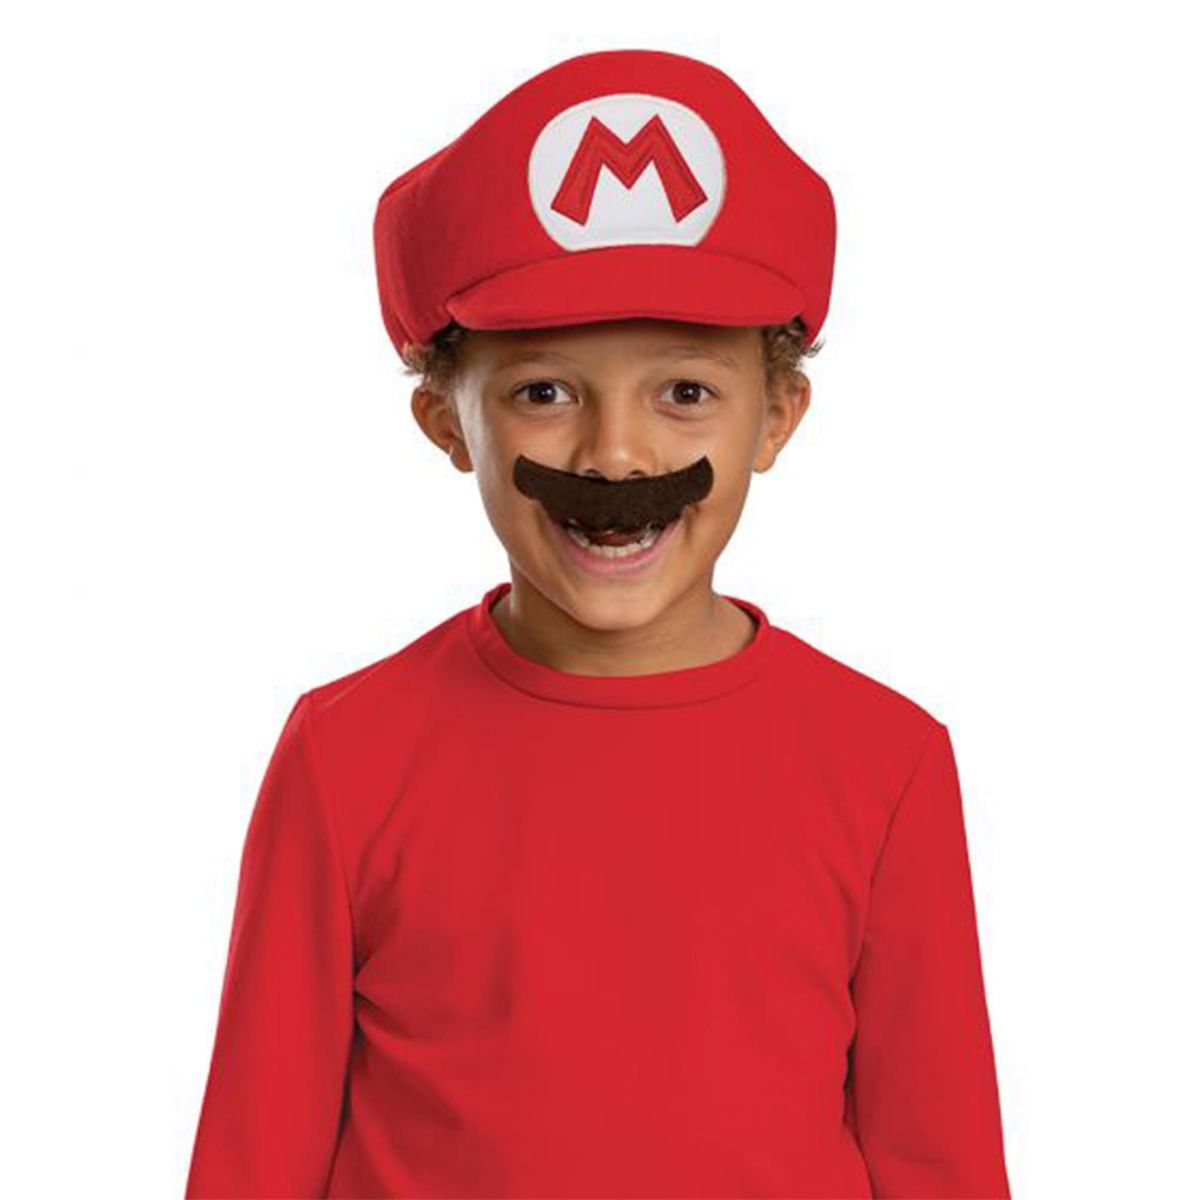 Disguise Super Mario Bros. Mario Hat and Mustache Child Costume Kit | Target